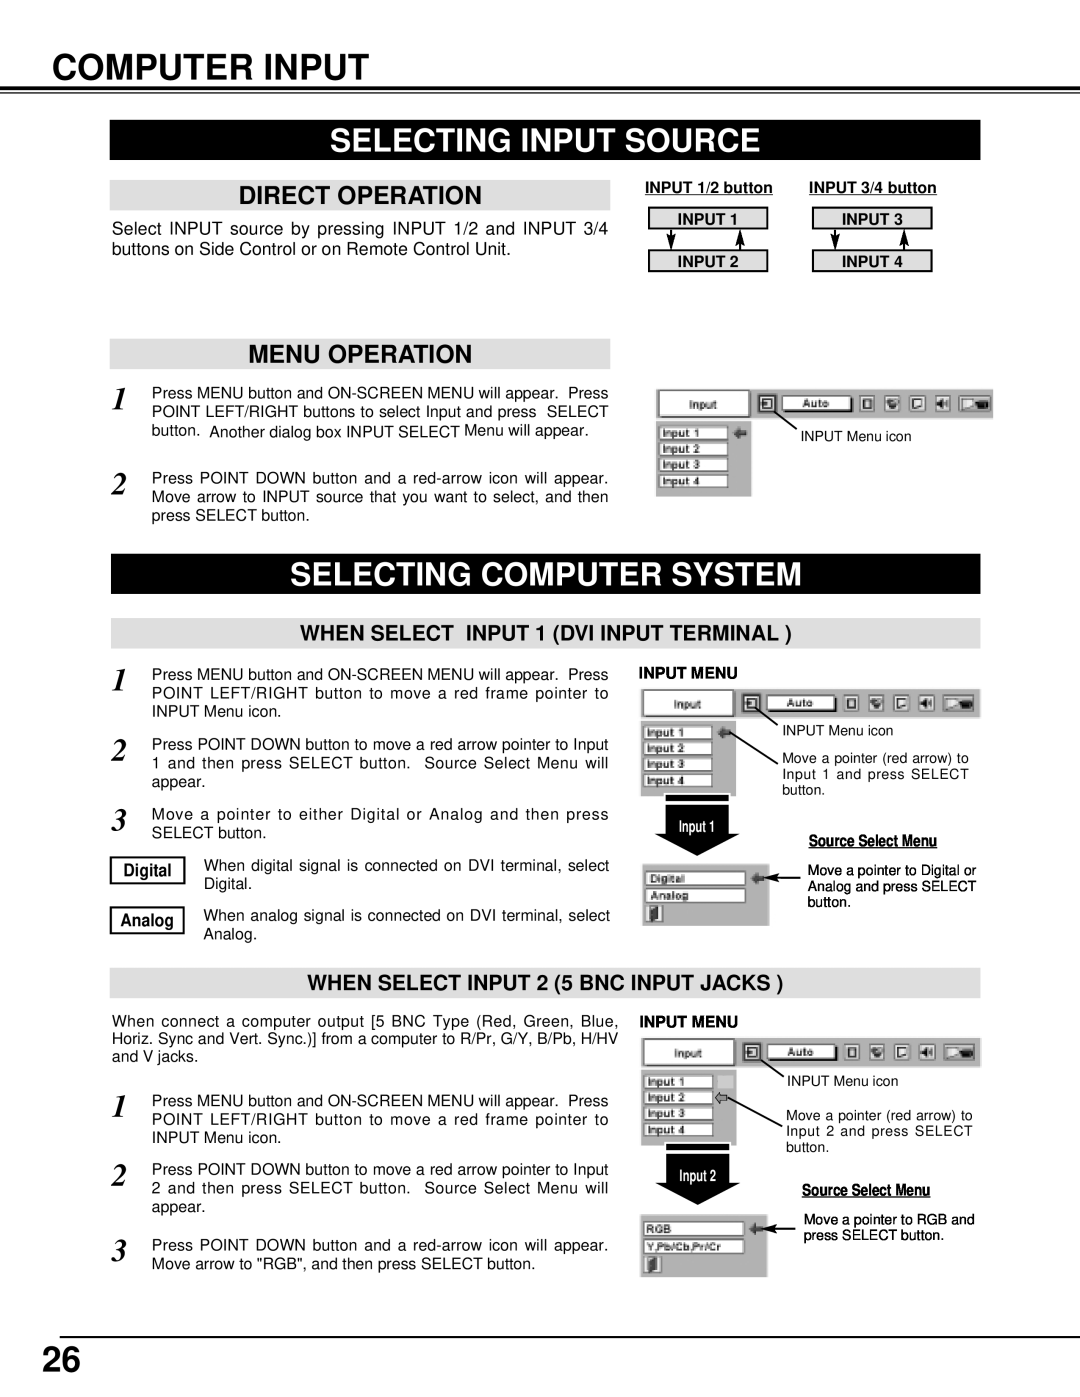 Eiki LC-UXT1 Computer Input, Selecting Input Source, Selecting Computer System, Direct Operation, Menu Operation 